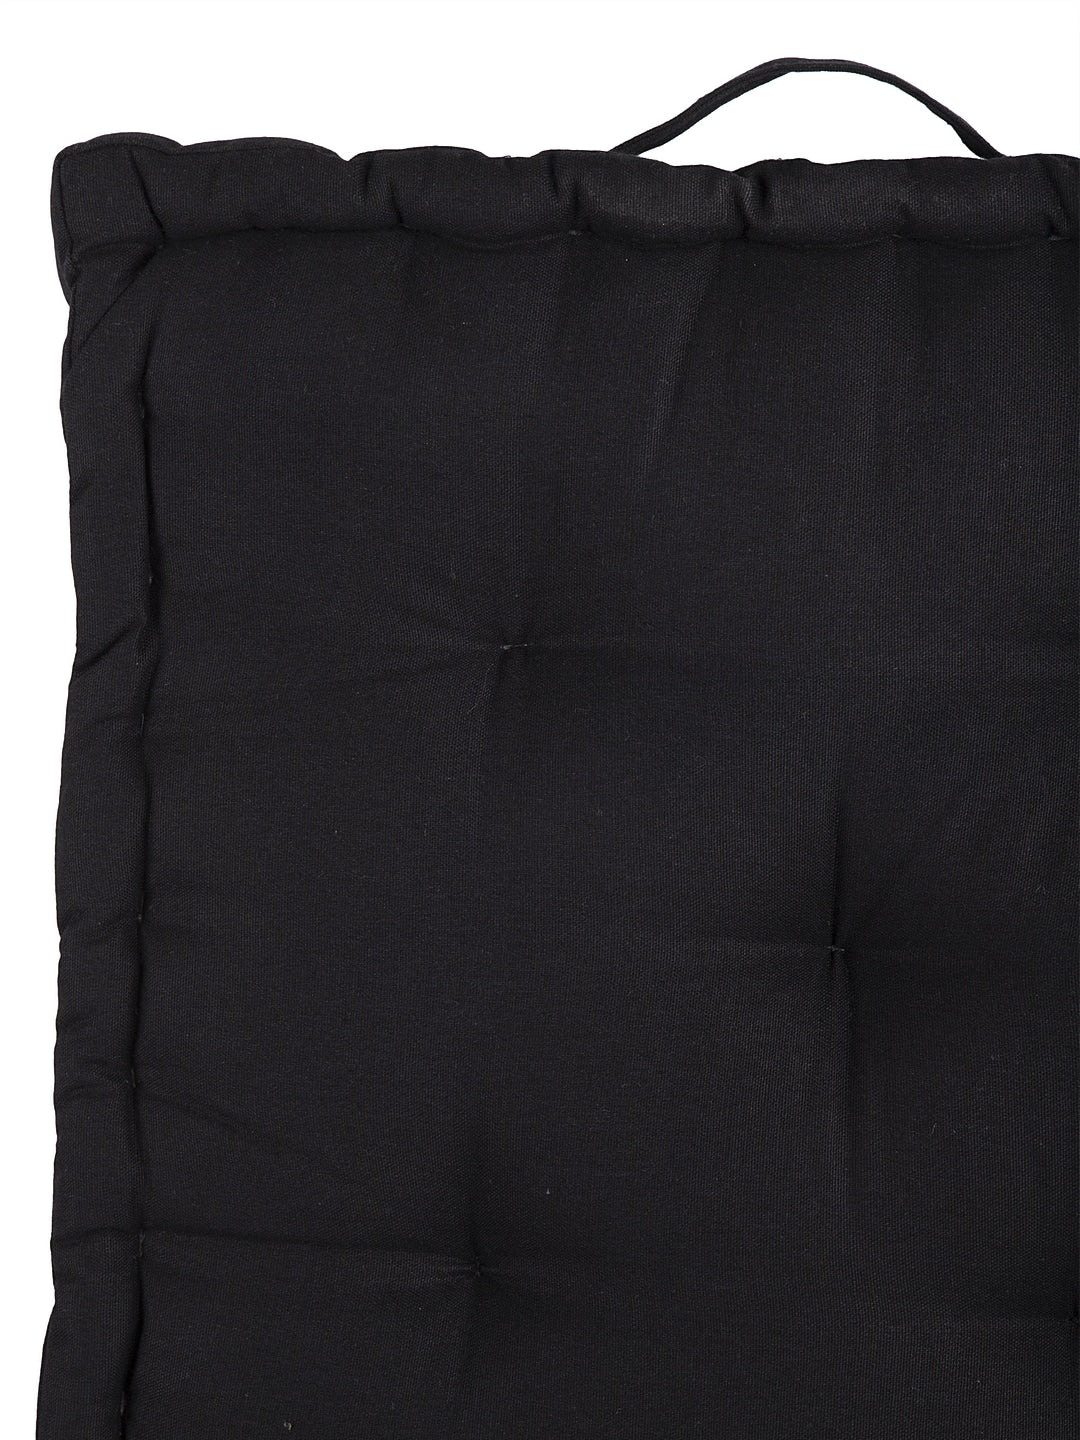 KapalBhati Black Matlas Floor Cushion